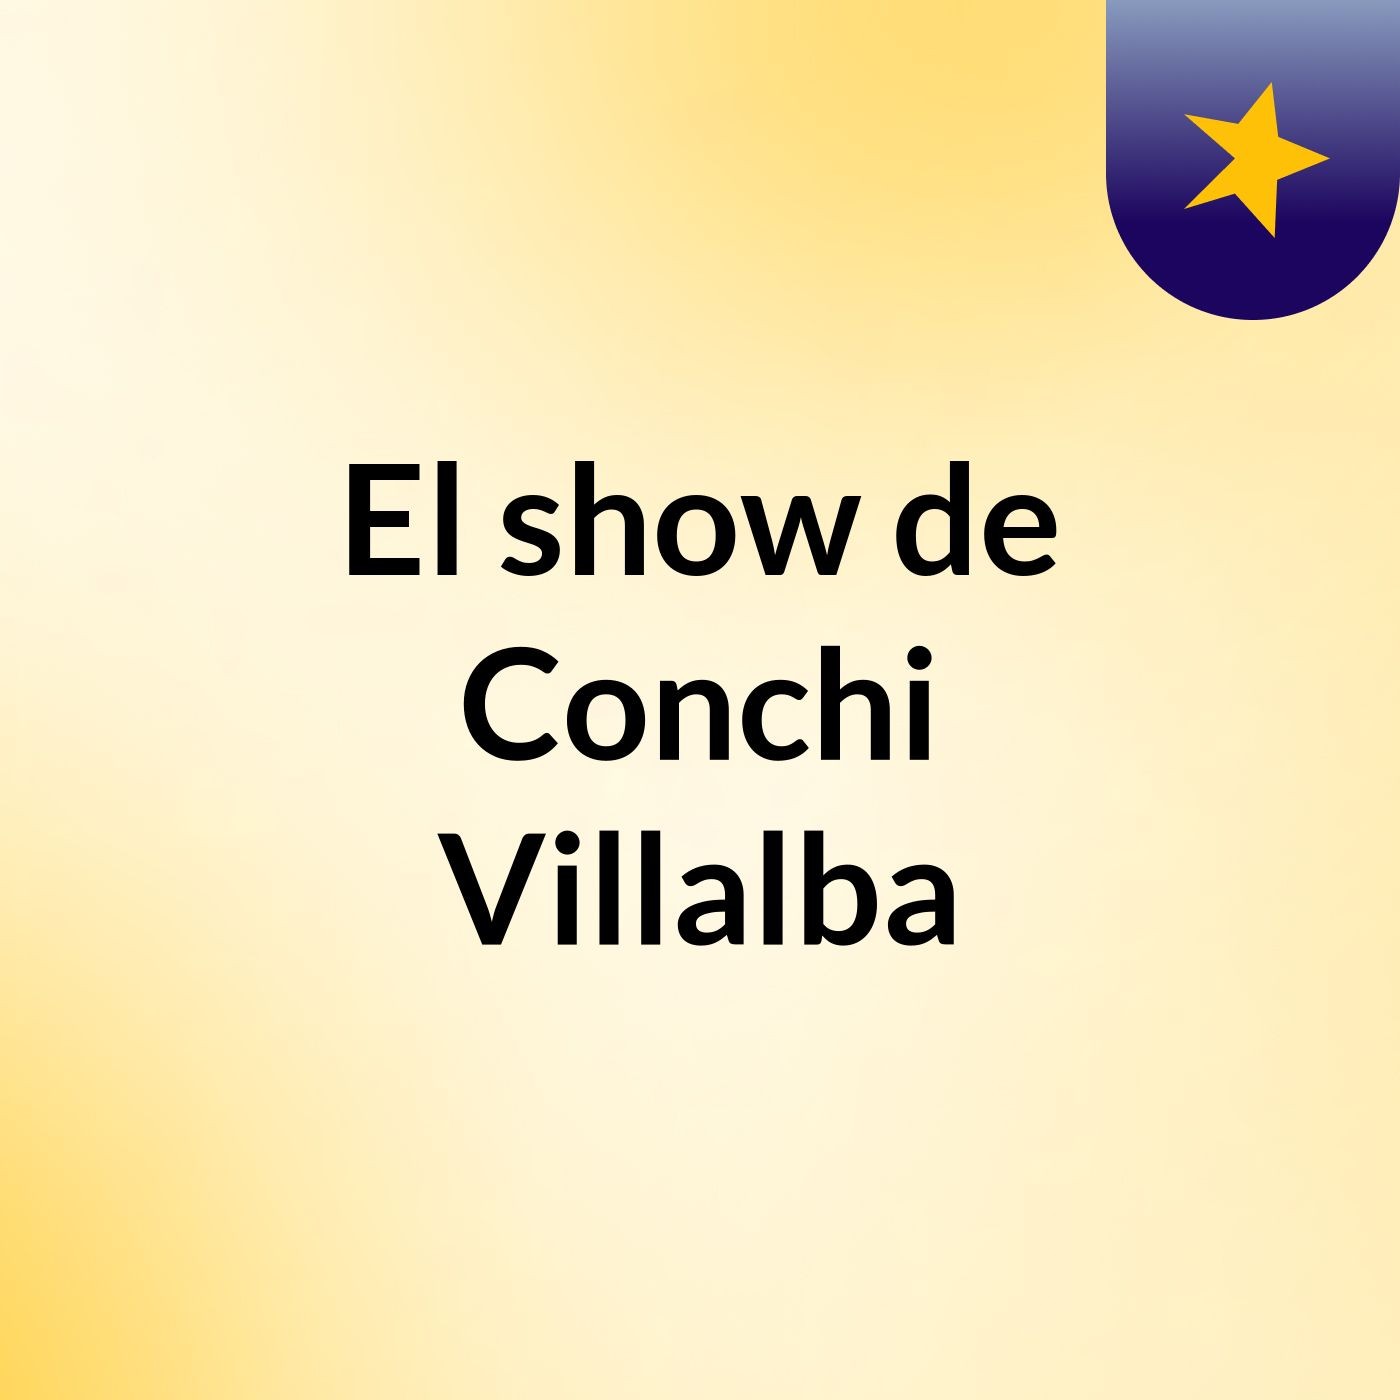 El show de Conchi Villalba